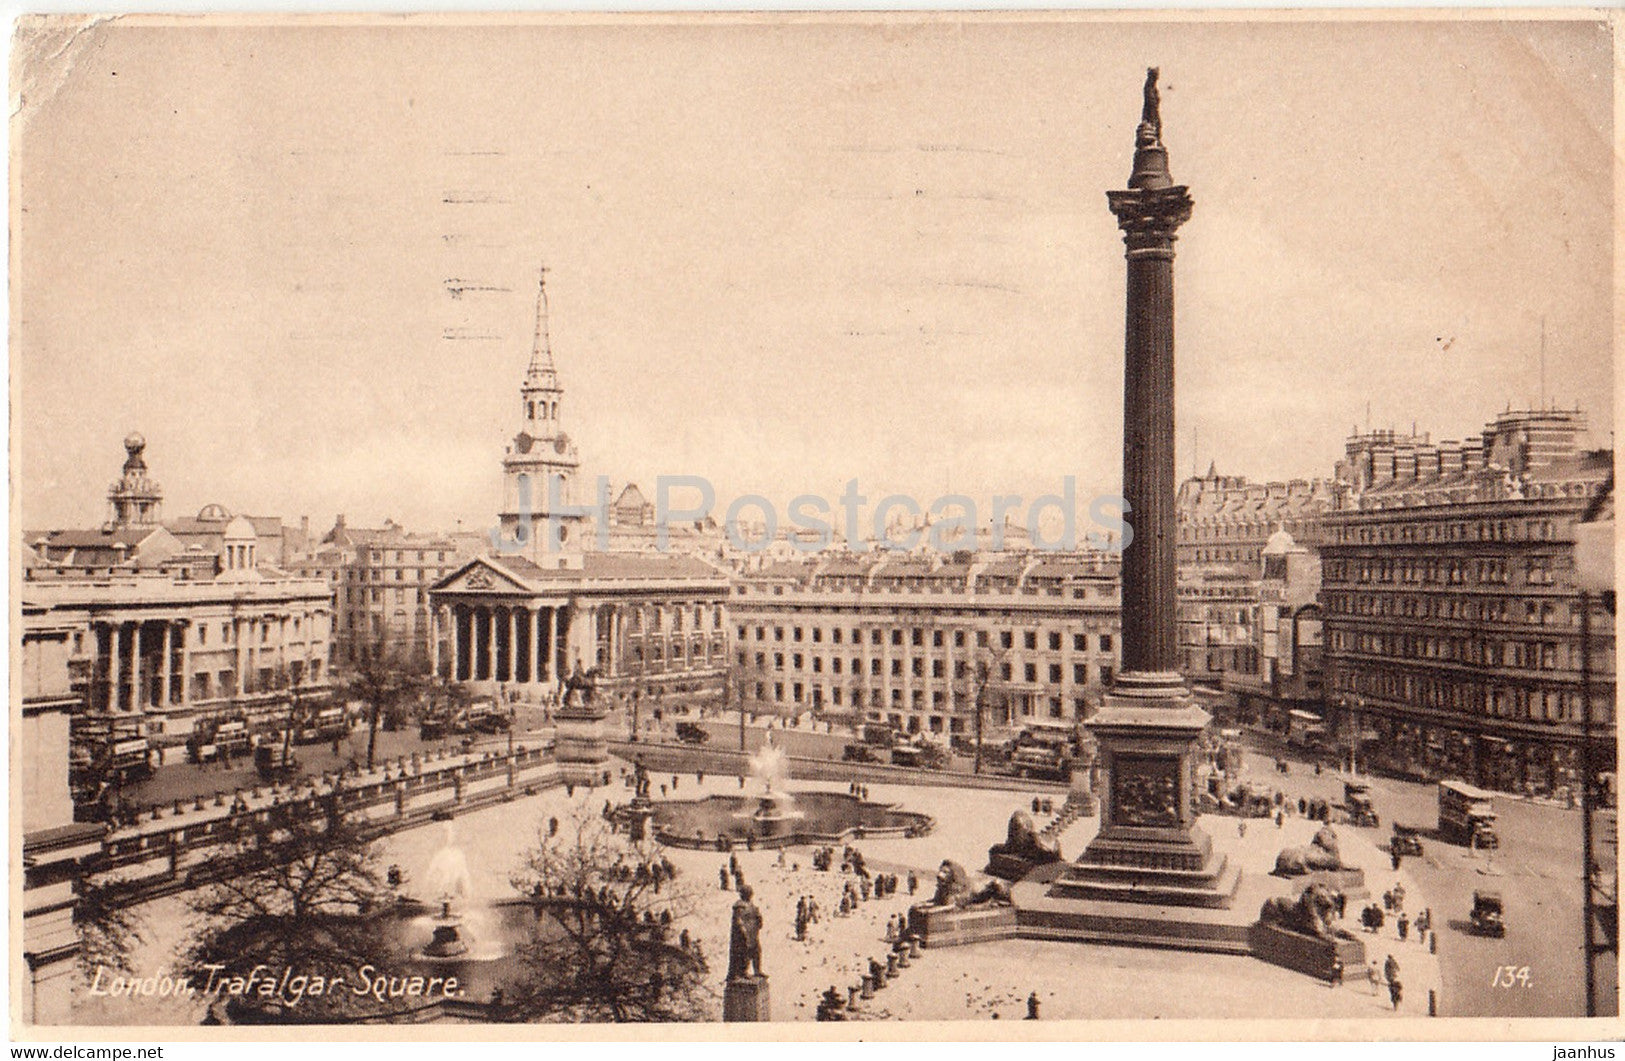 London - Trafalgar Square - Beagles - 134 - old postcard - England - United Kingdom - used - JH Postcards